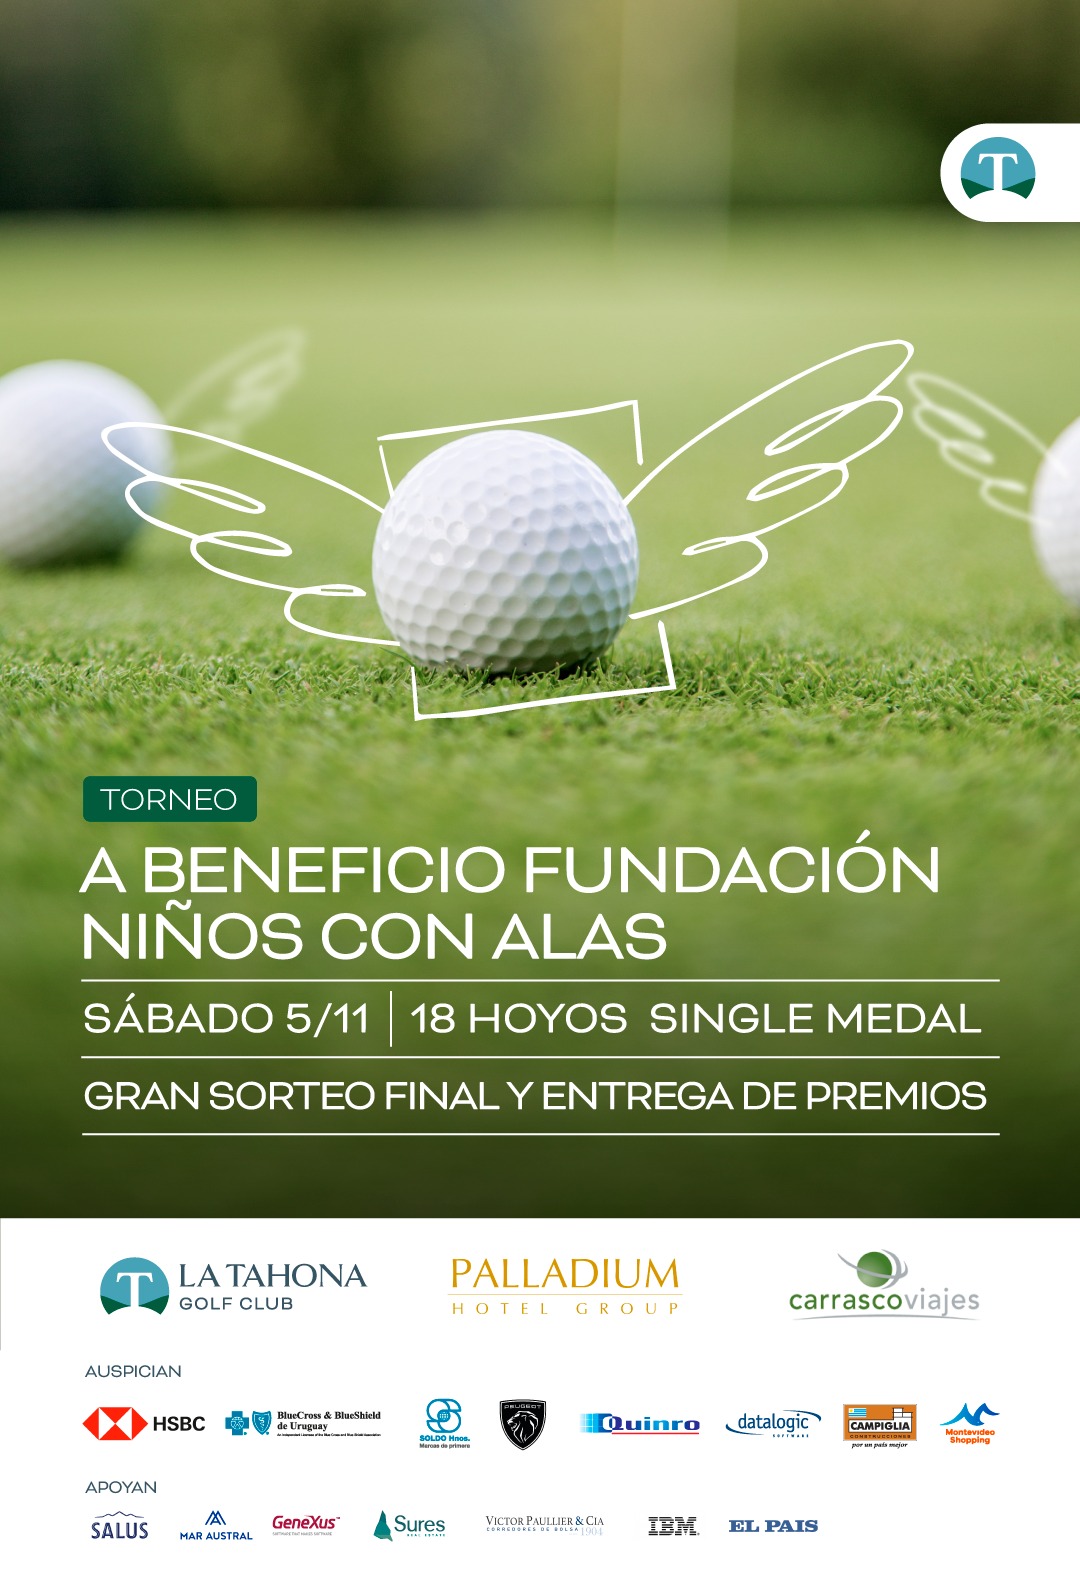 Torneo Fundacin Nios con Alas _ Sbado 5/11 _ 18 hoyos single medal play